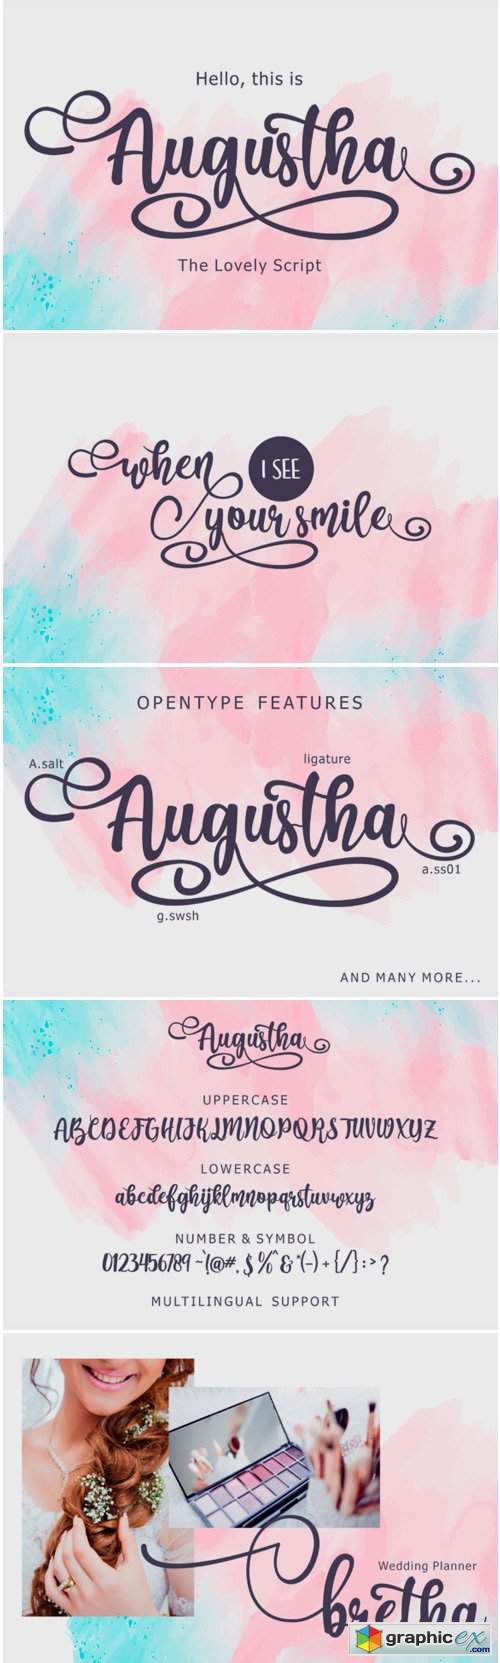 Augustha Font